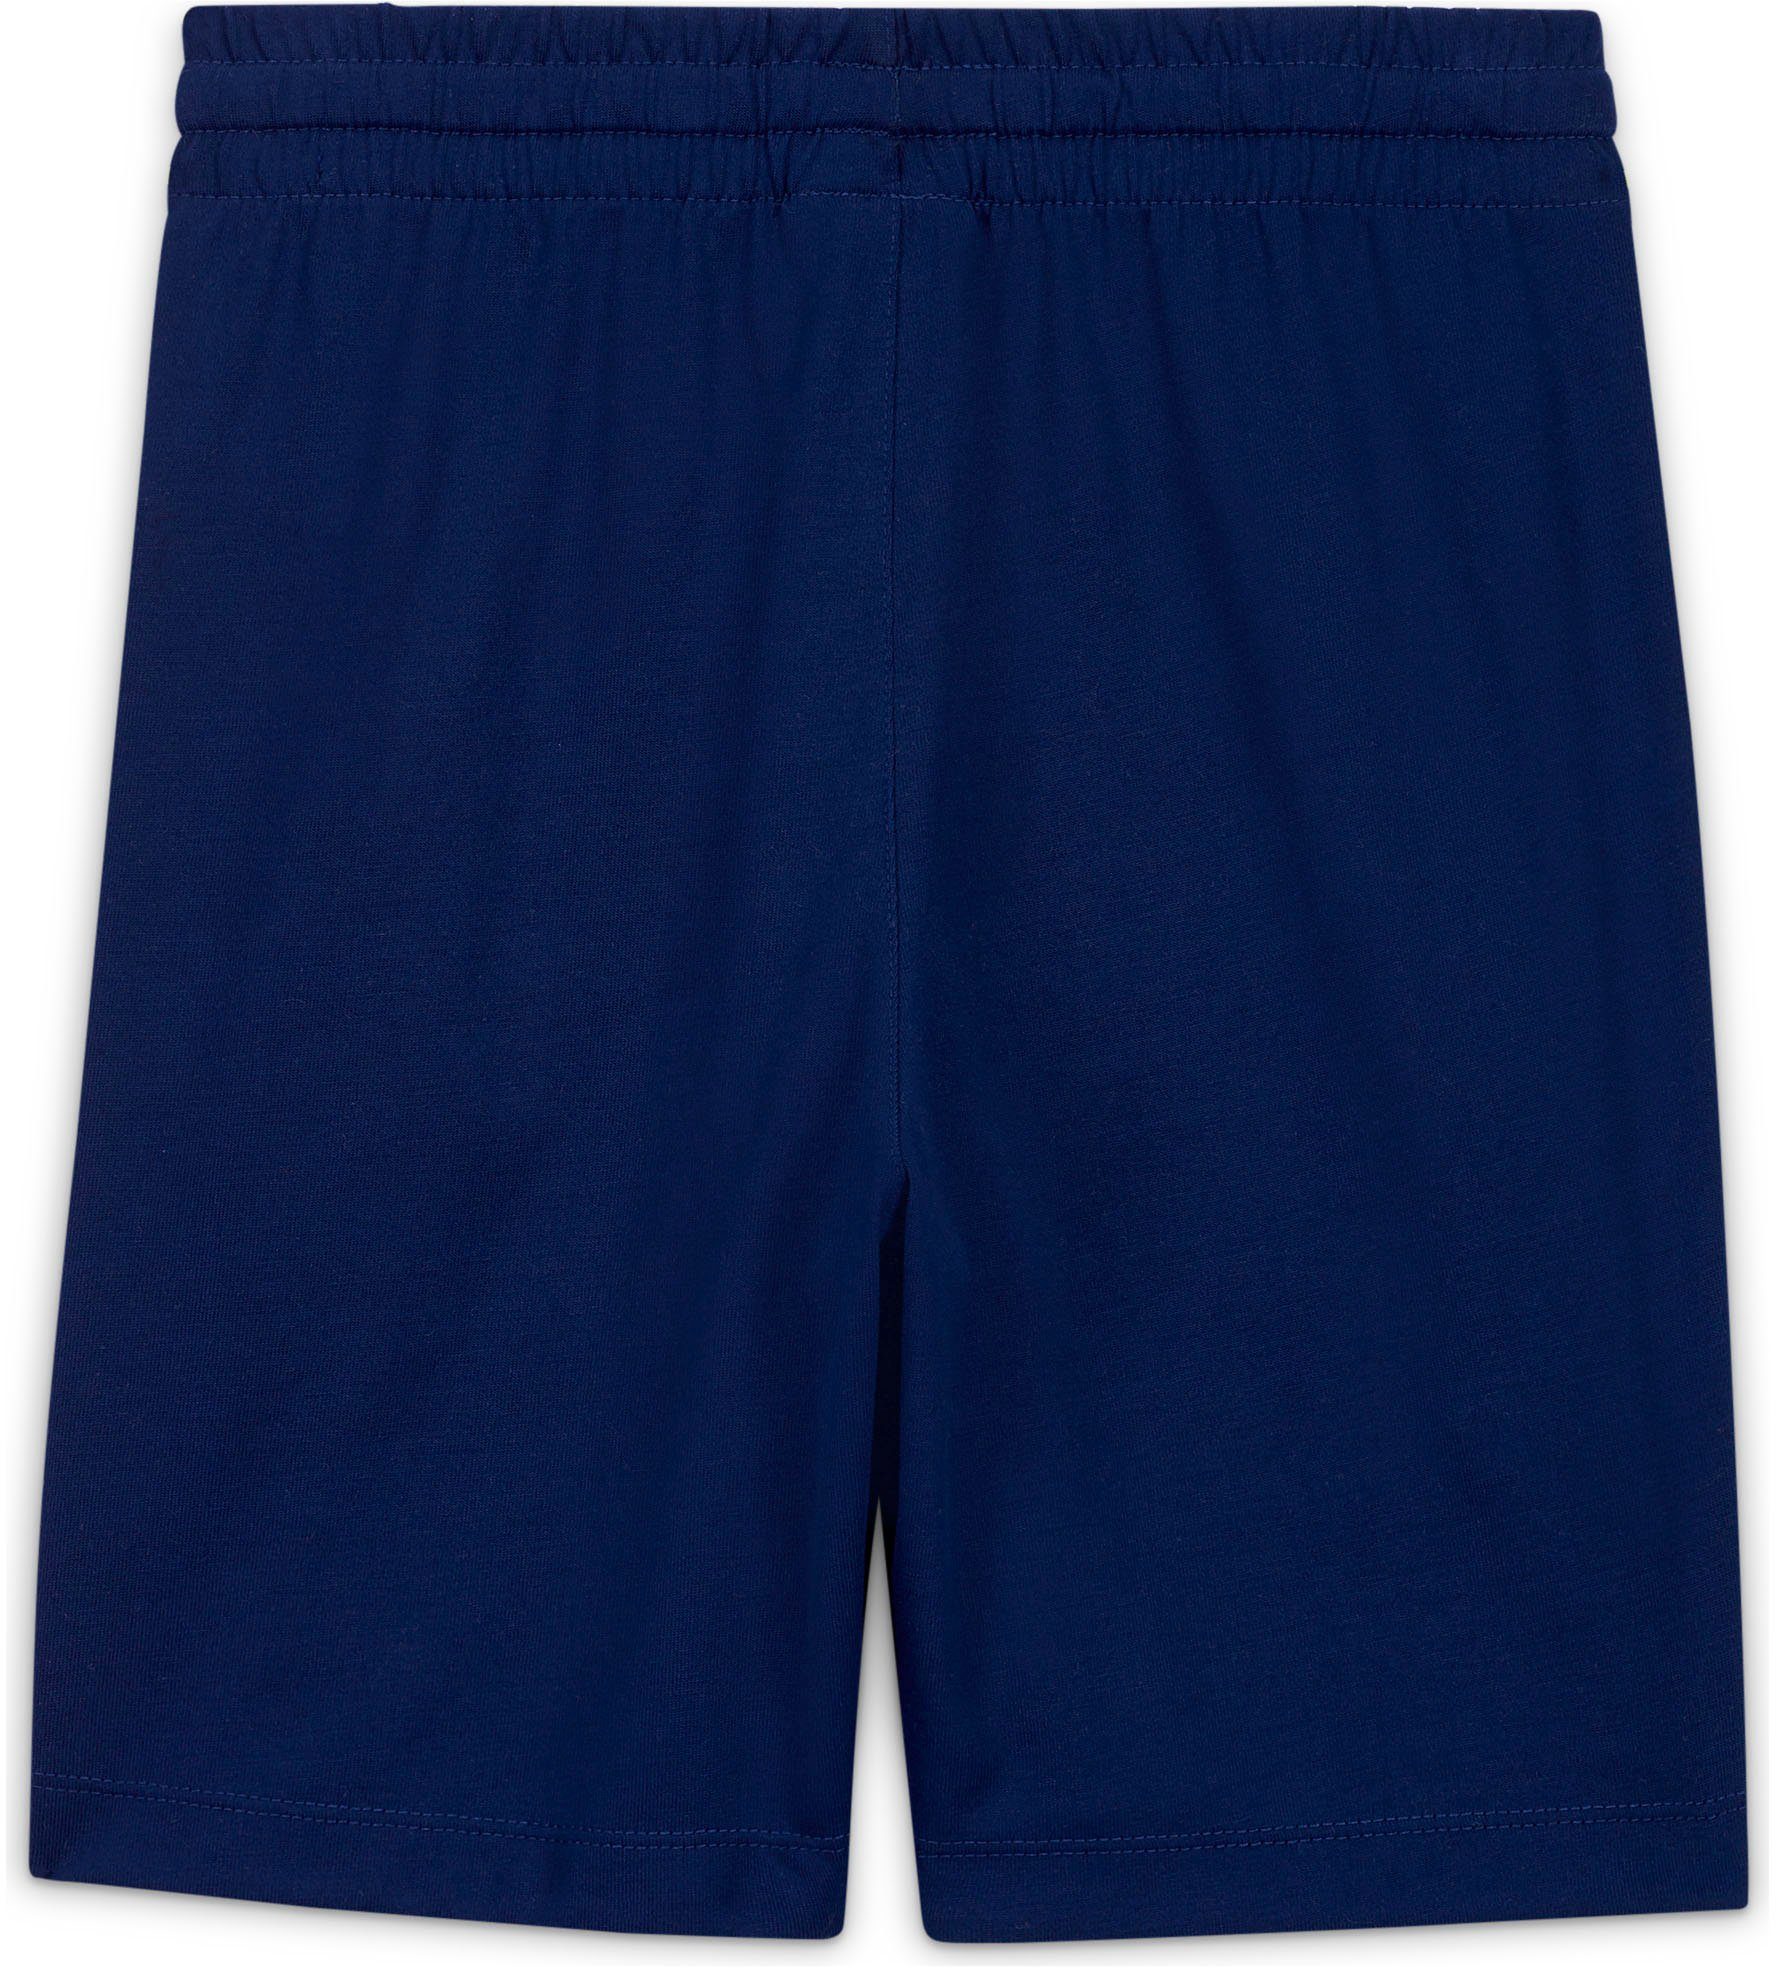 KIDS' (BOYS) Sportswear JERSEY Nike SHORTS dunkelblau BIG Shorts